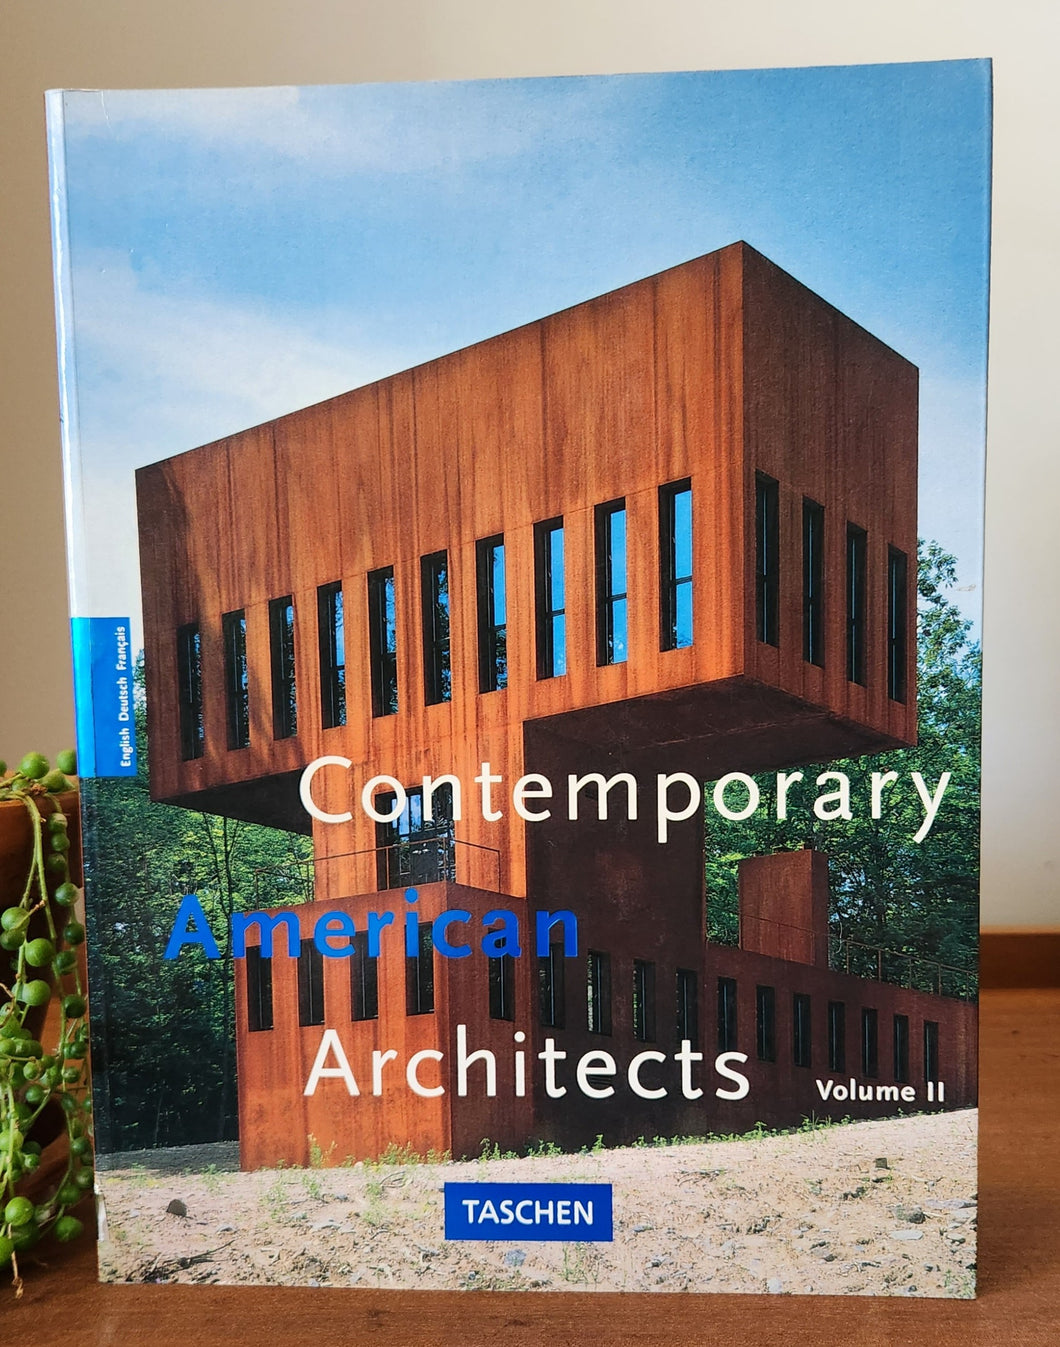 Contemporary American Architects (Volume 2) by Philip Jodidio